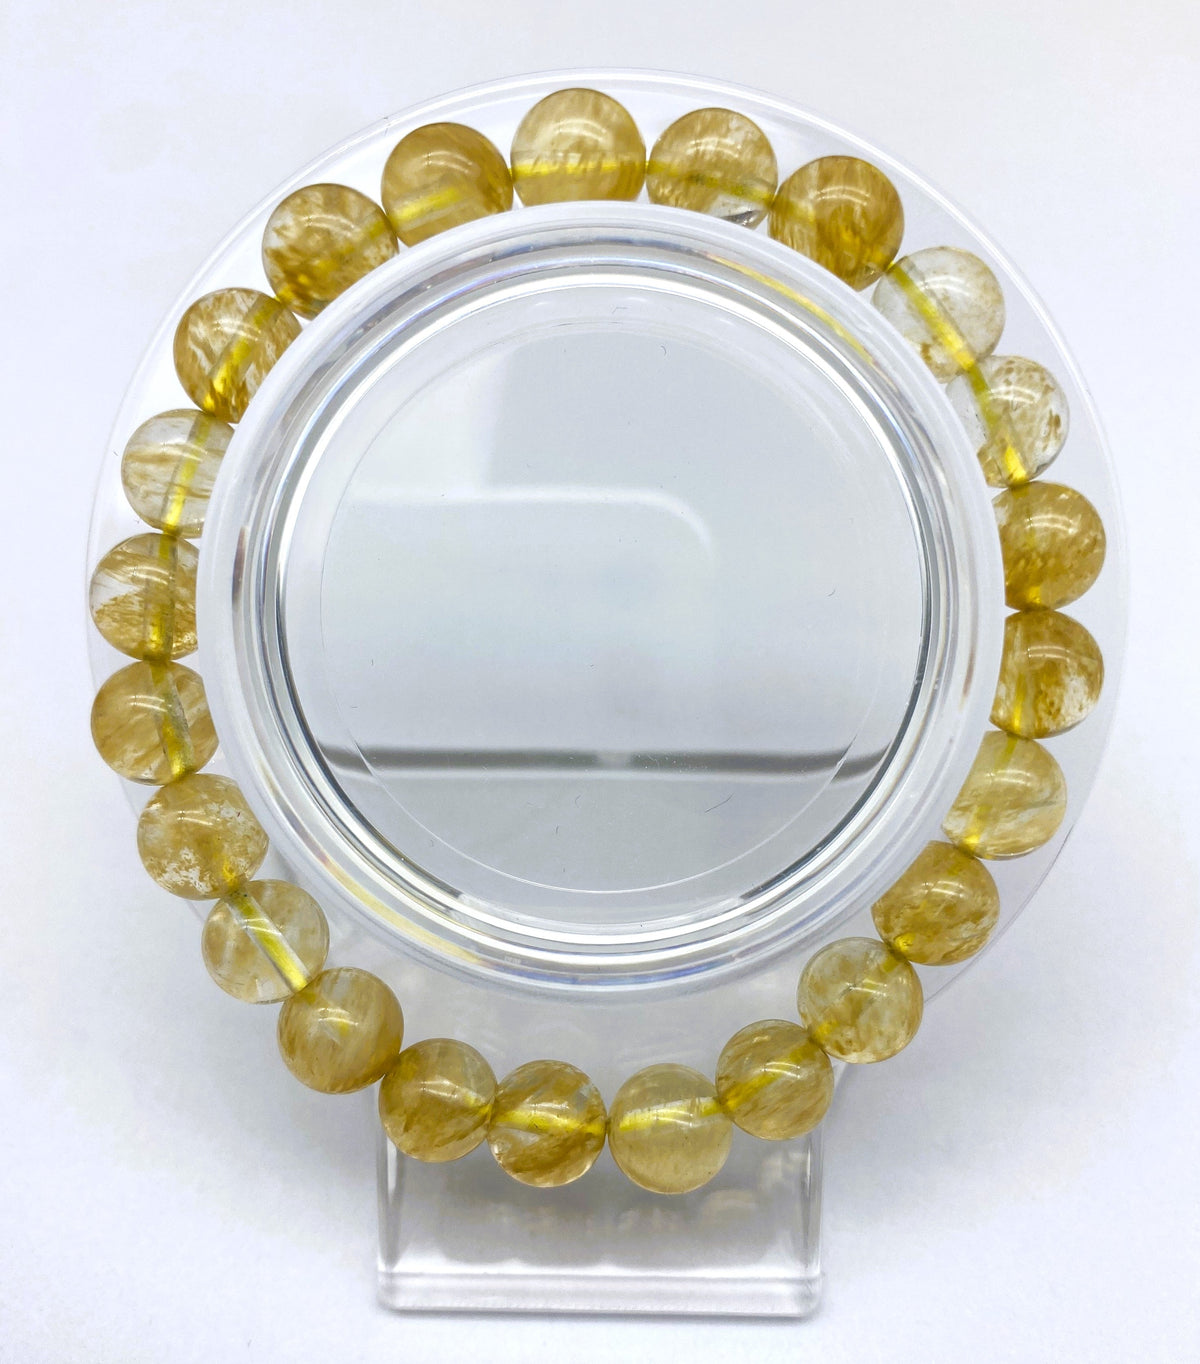 Quartz $1.99 Plain Design Bracelet Collection1 0mm 8mm 6mm Crystal Quartz Energy Chakras Jewelry Women Men Girl